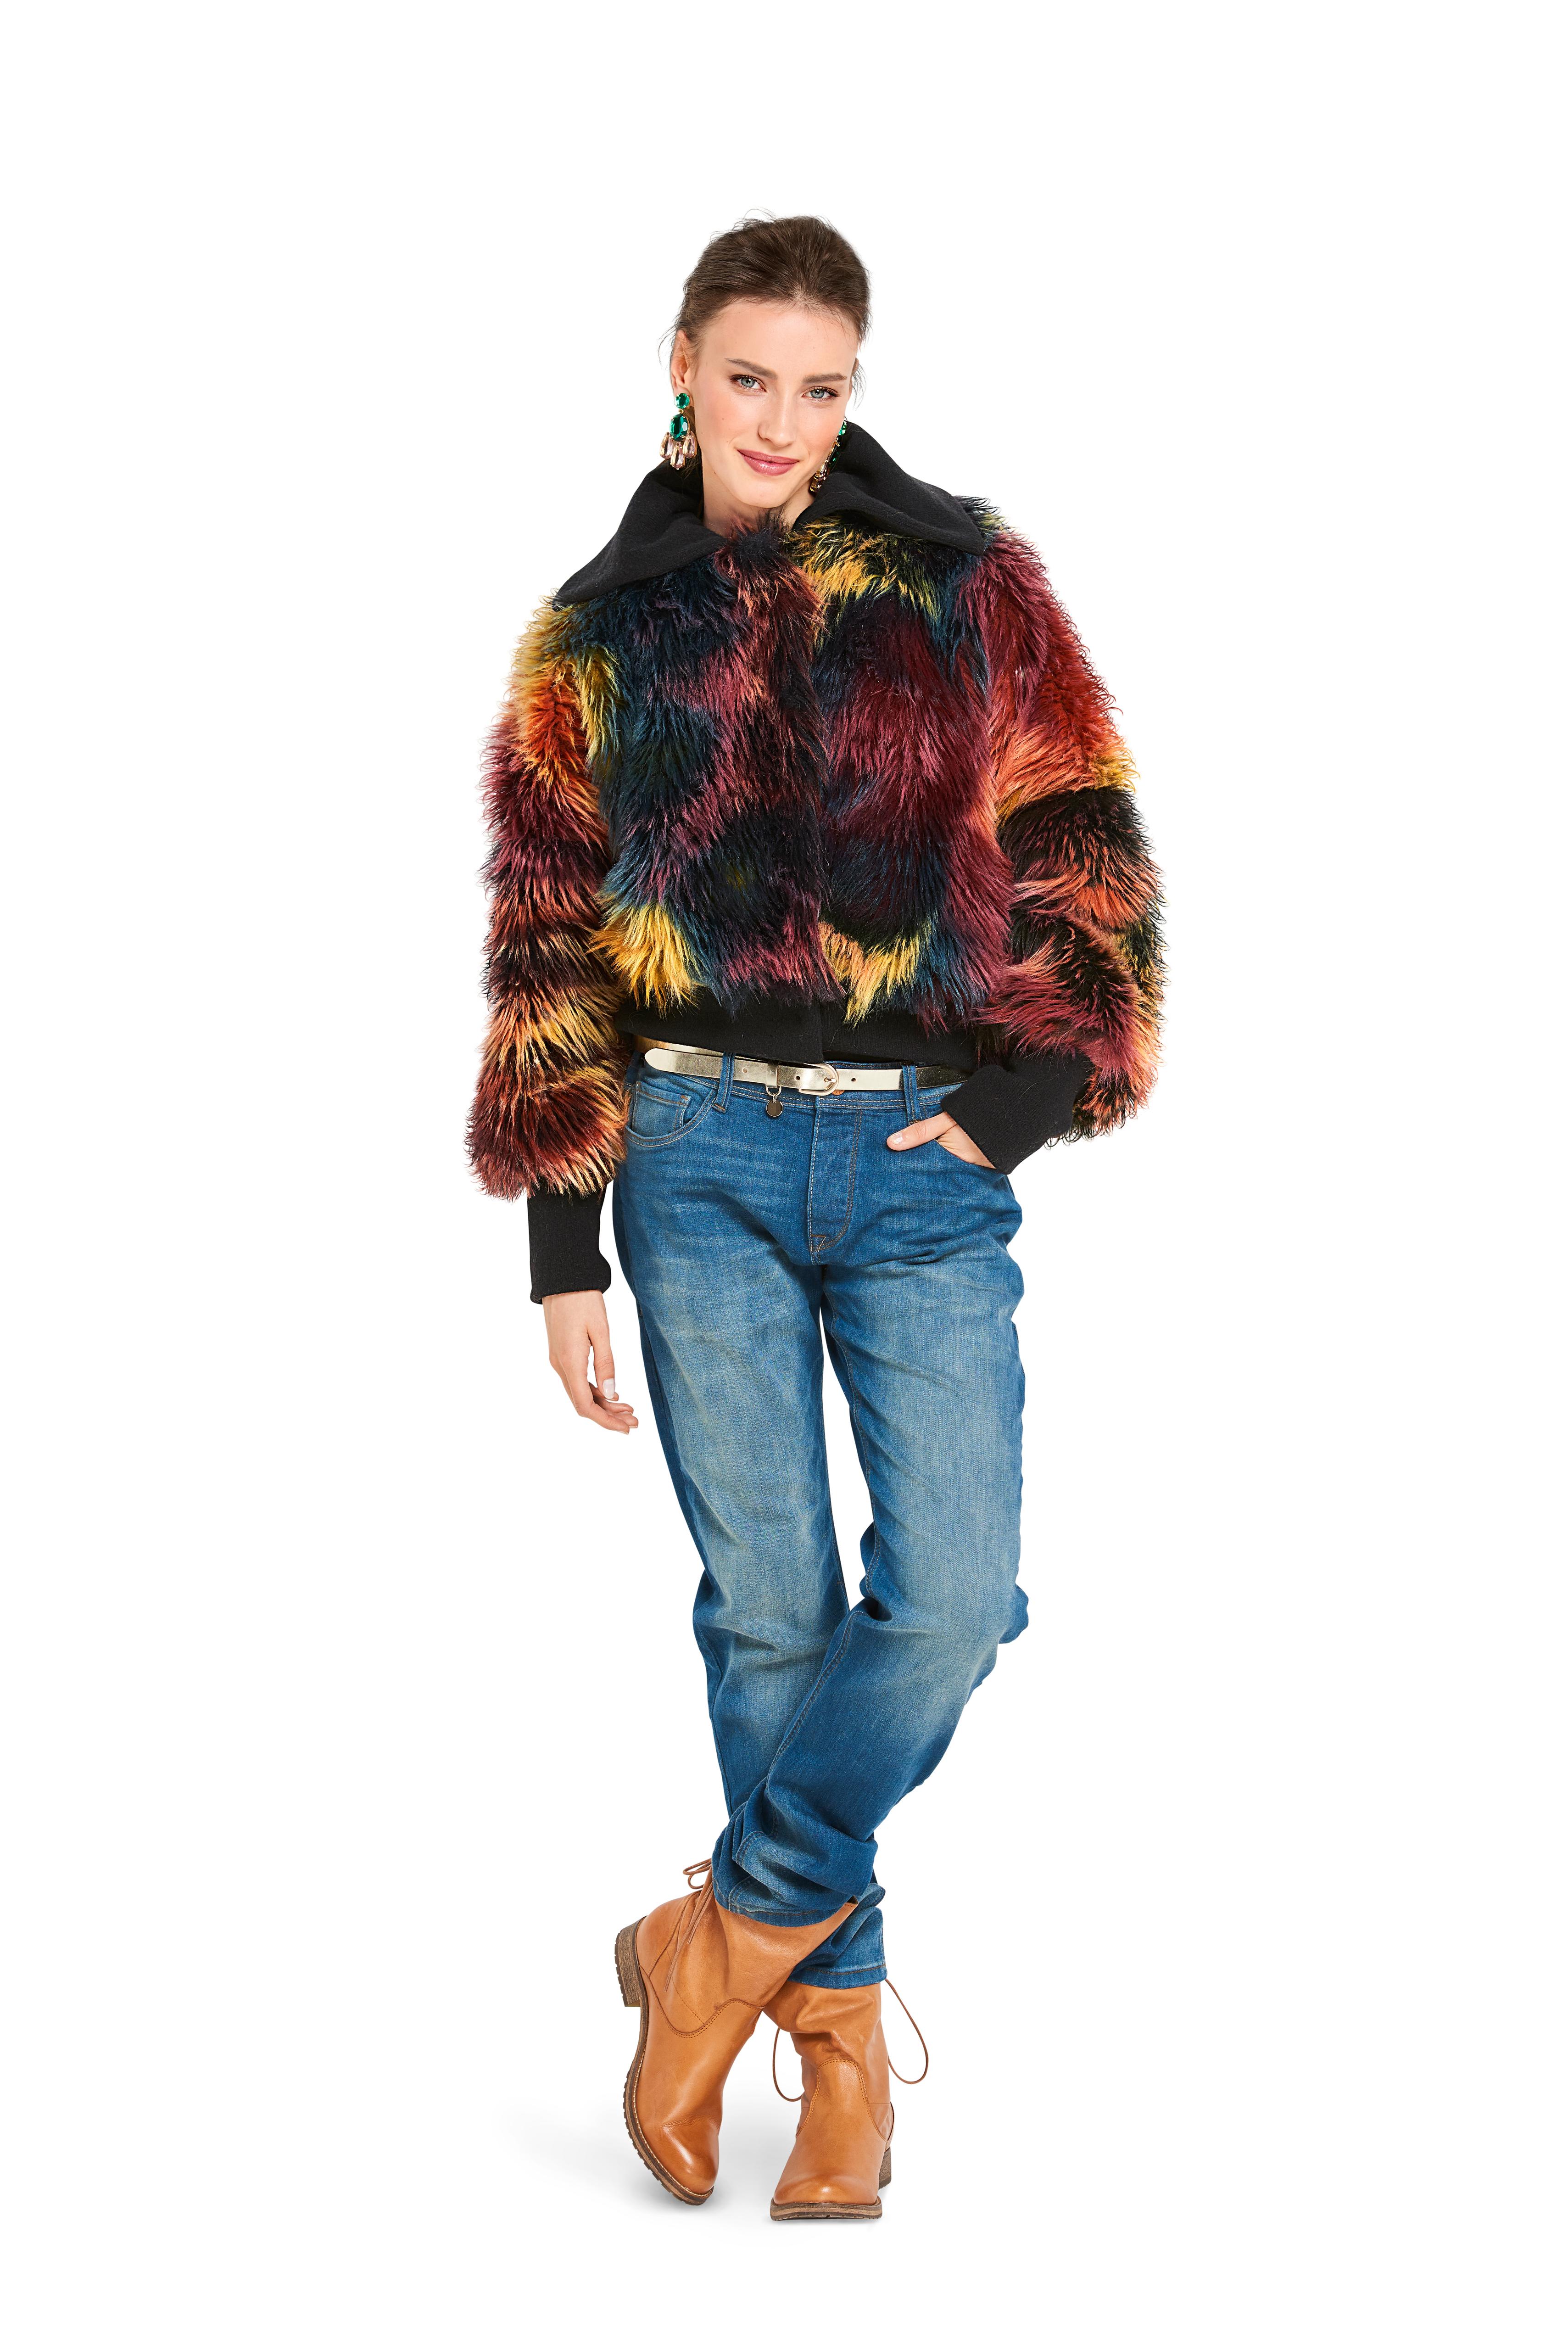 Burda B6359 Women's Fur Coat